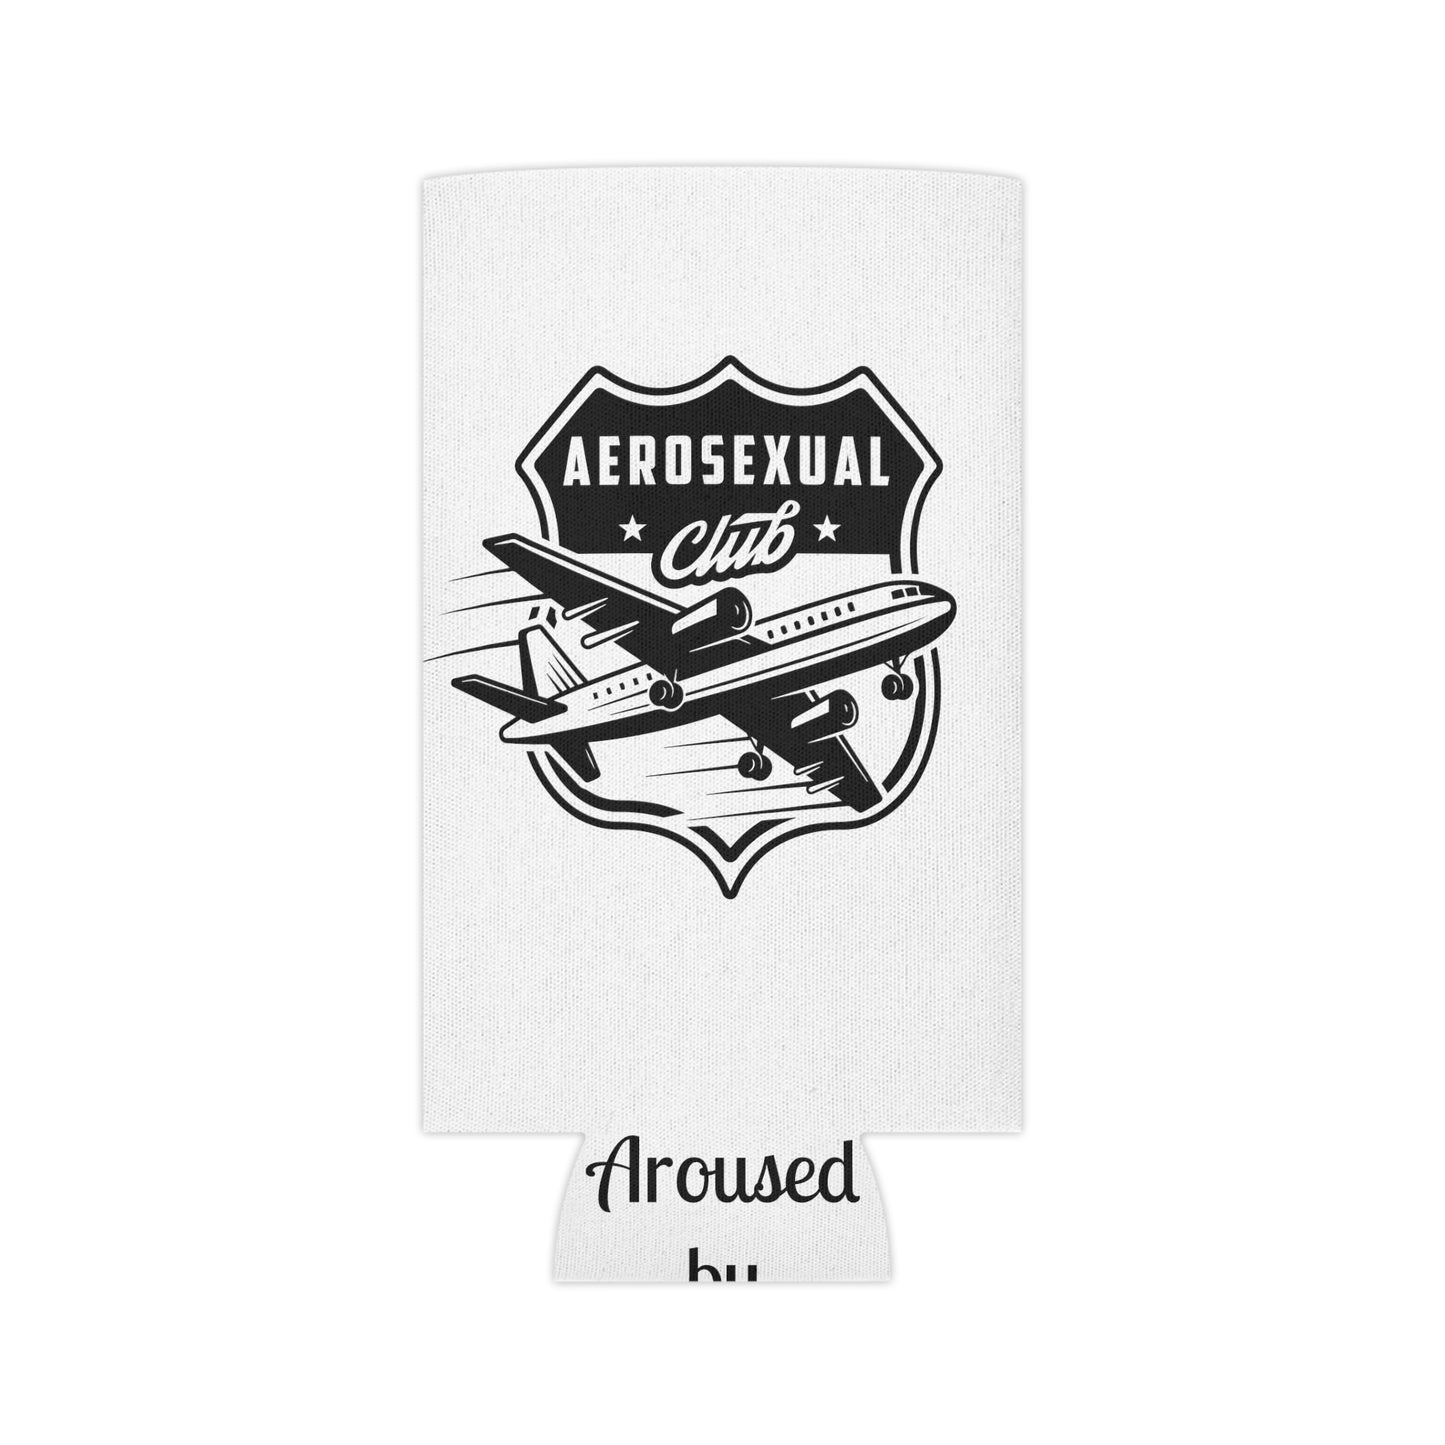 Aerosexual Club soft can sleeve (white)